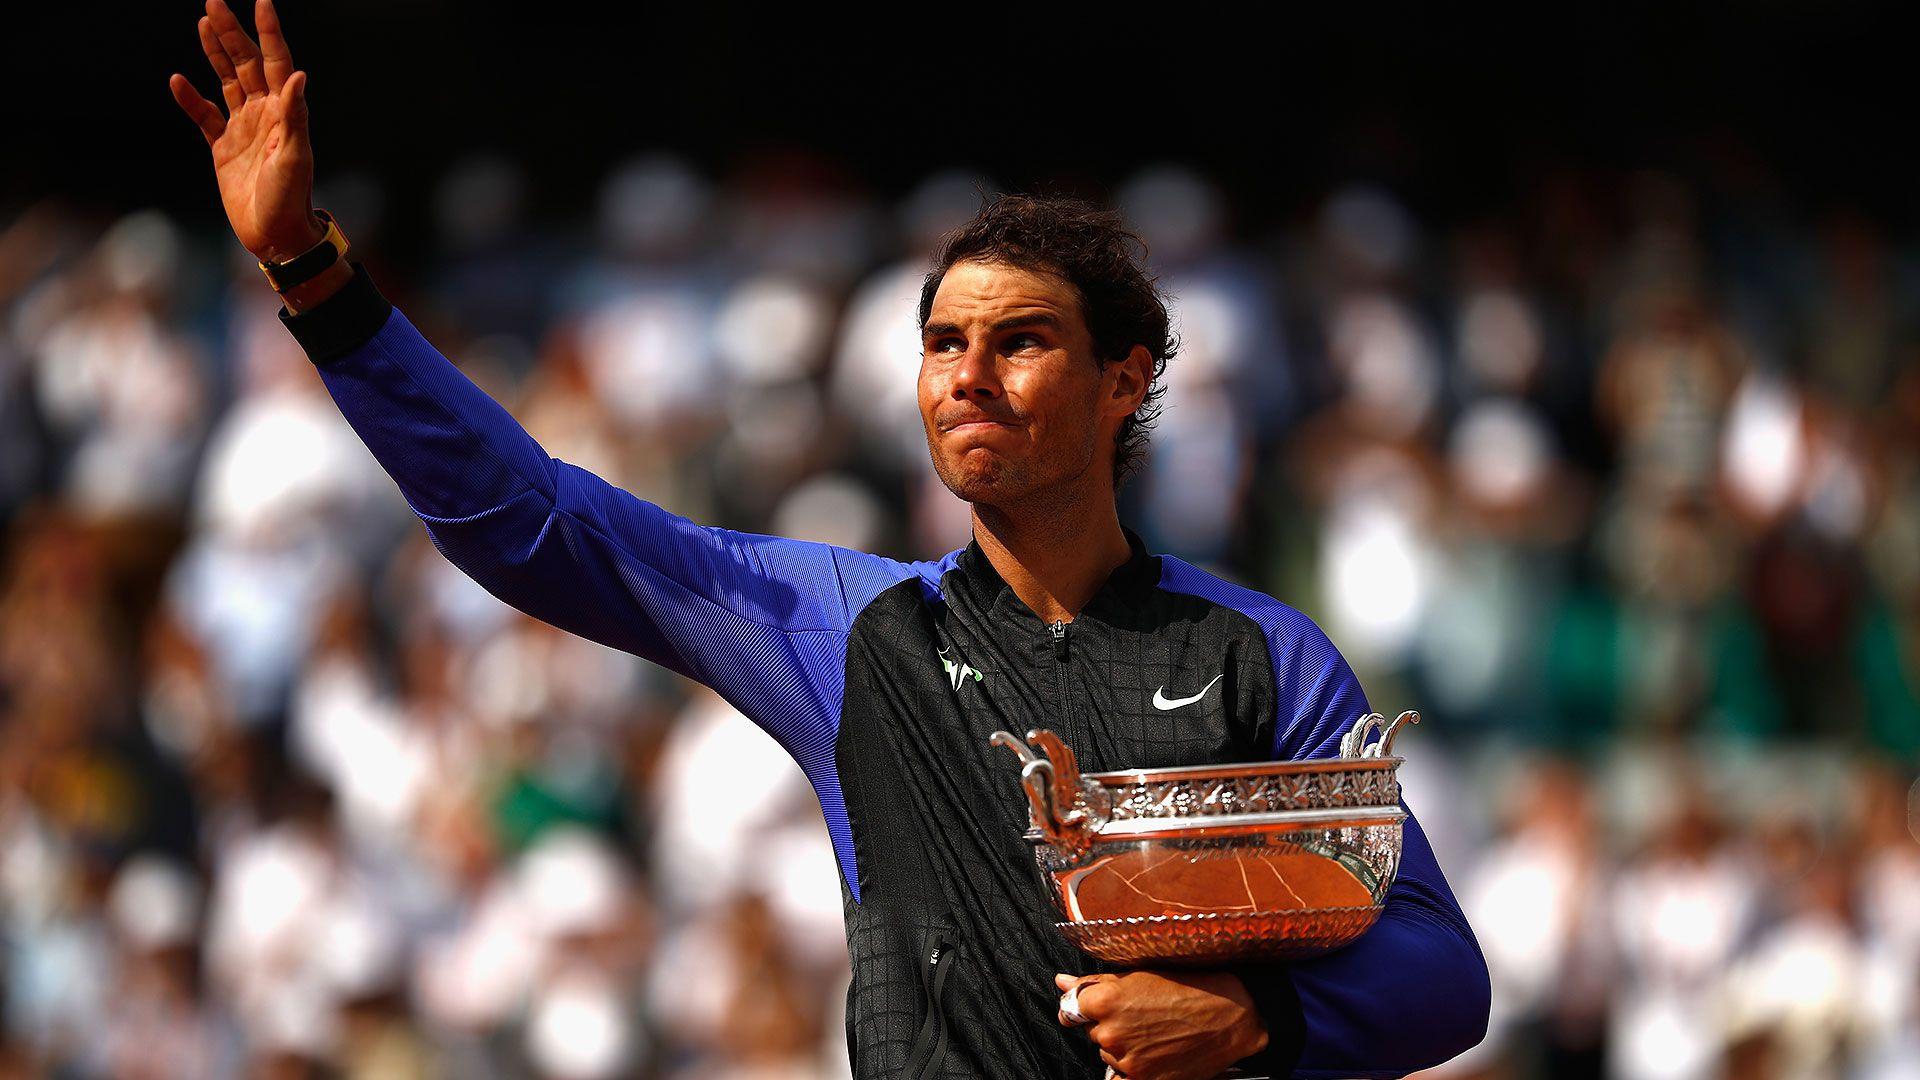 Social Reacts to Nadal Triumph. ATP World Tour